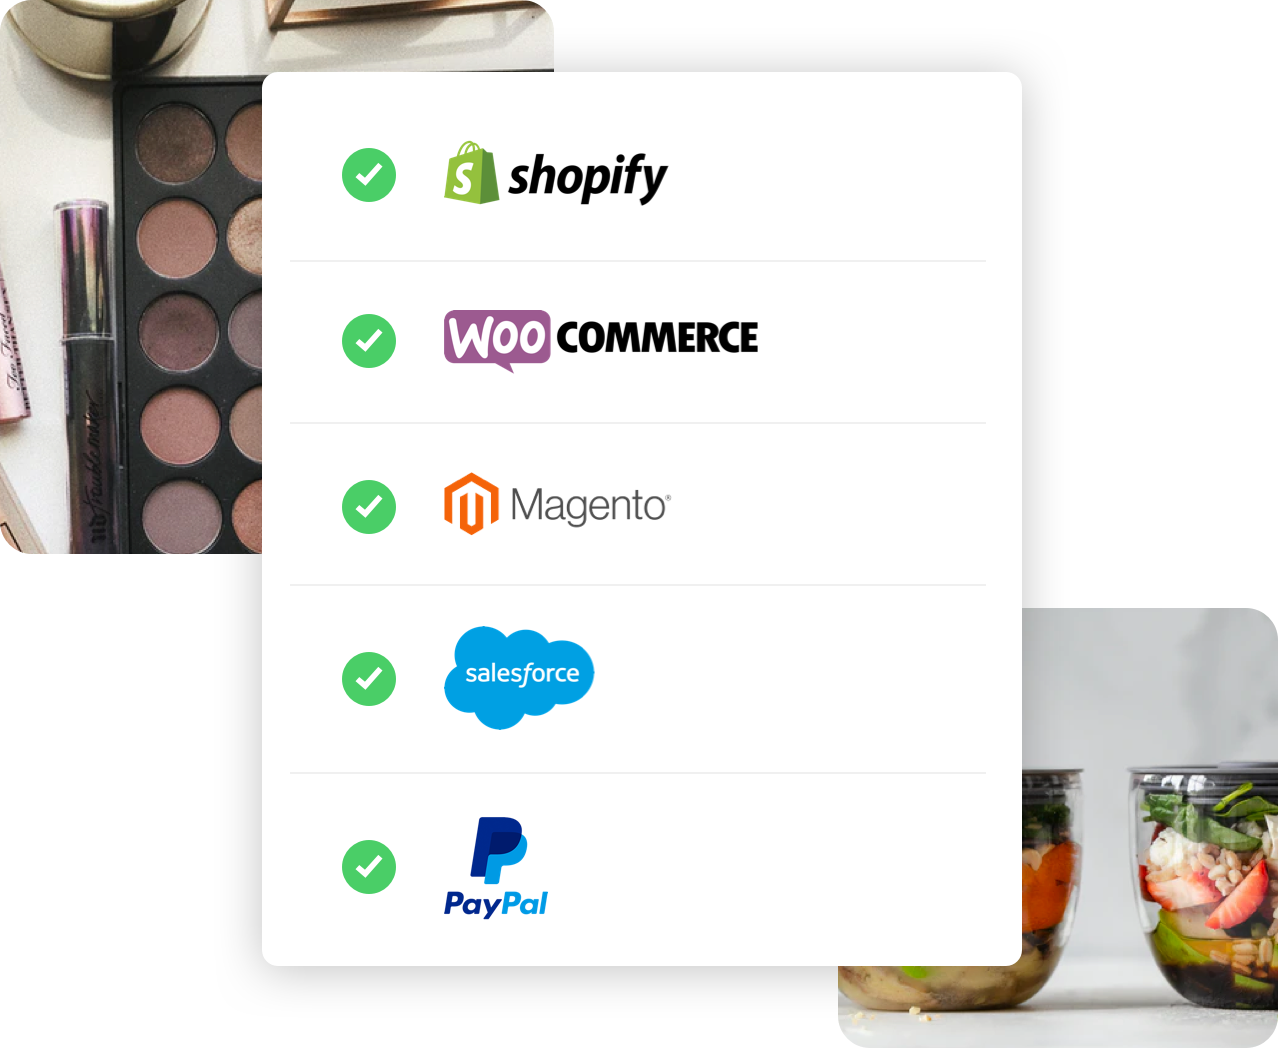 ecommerce shop and influencers one platform